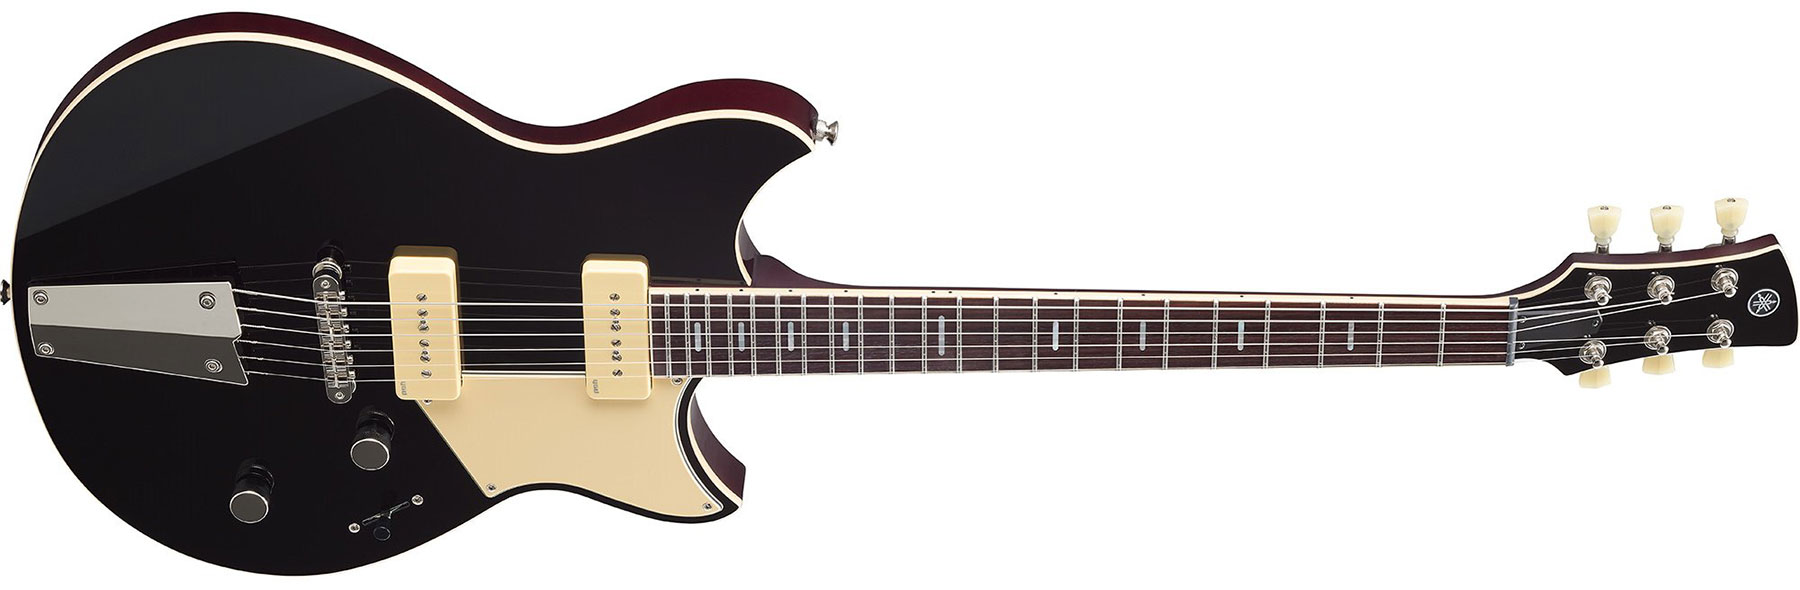 Yamaha Rss02t Revstar Standard 2p90 Ht Rw - Black - Double cut electric guitar - Variation 1